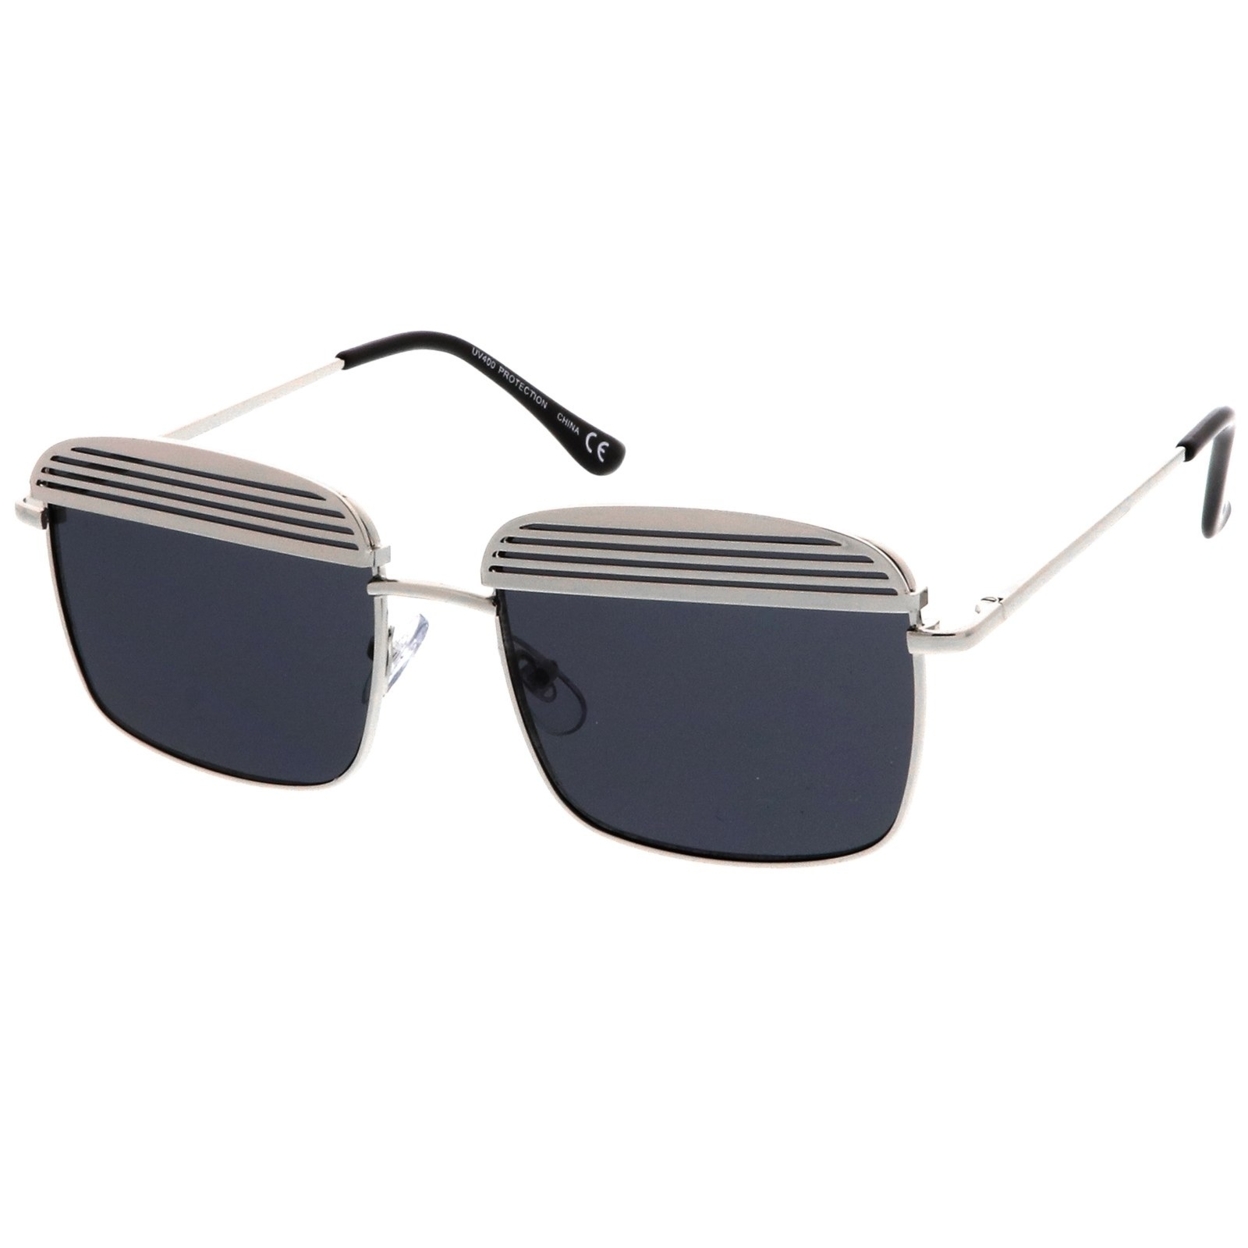 Modern Ultra Slim Arms Metal Cover Super Flat Lens Square Sunglasses 53mm - Shiny Silver / Smoke